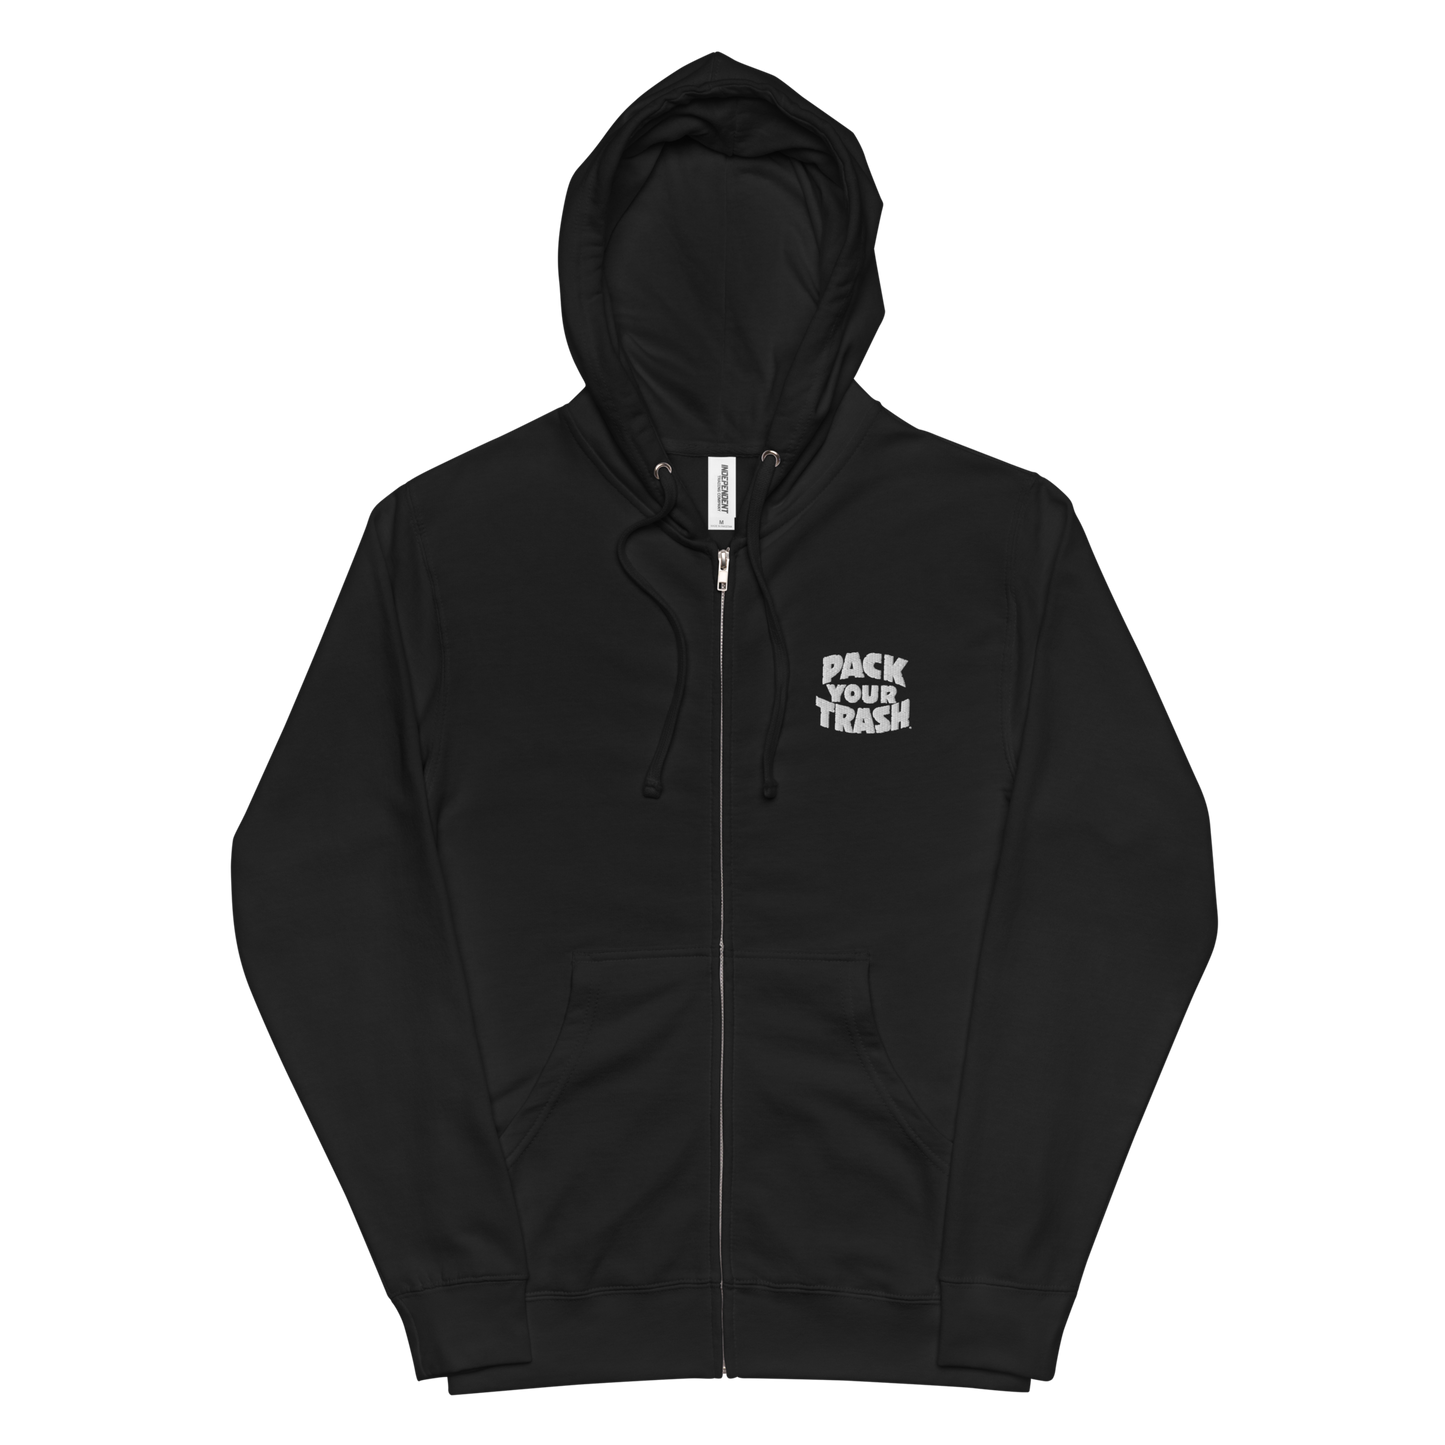 Pack Your Trash Surf Geek - Unisex fleece zip up hoodie